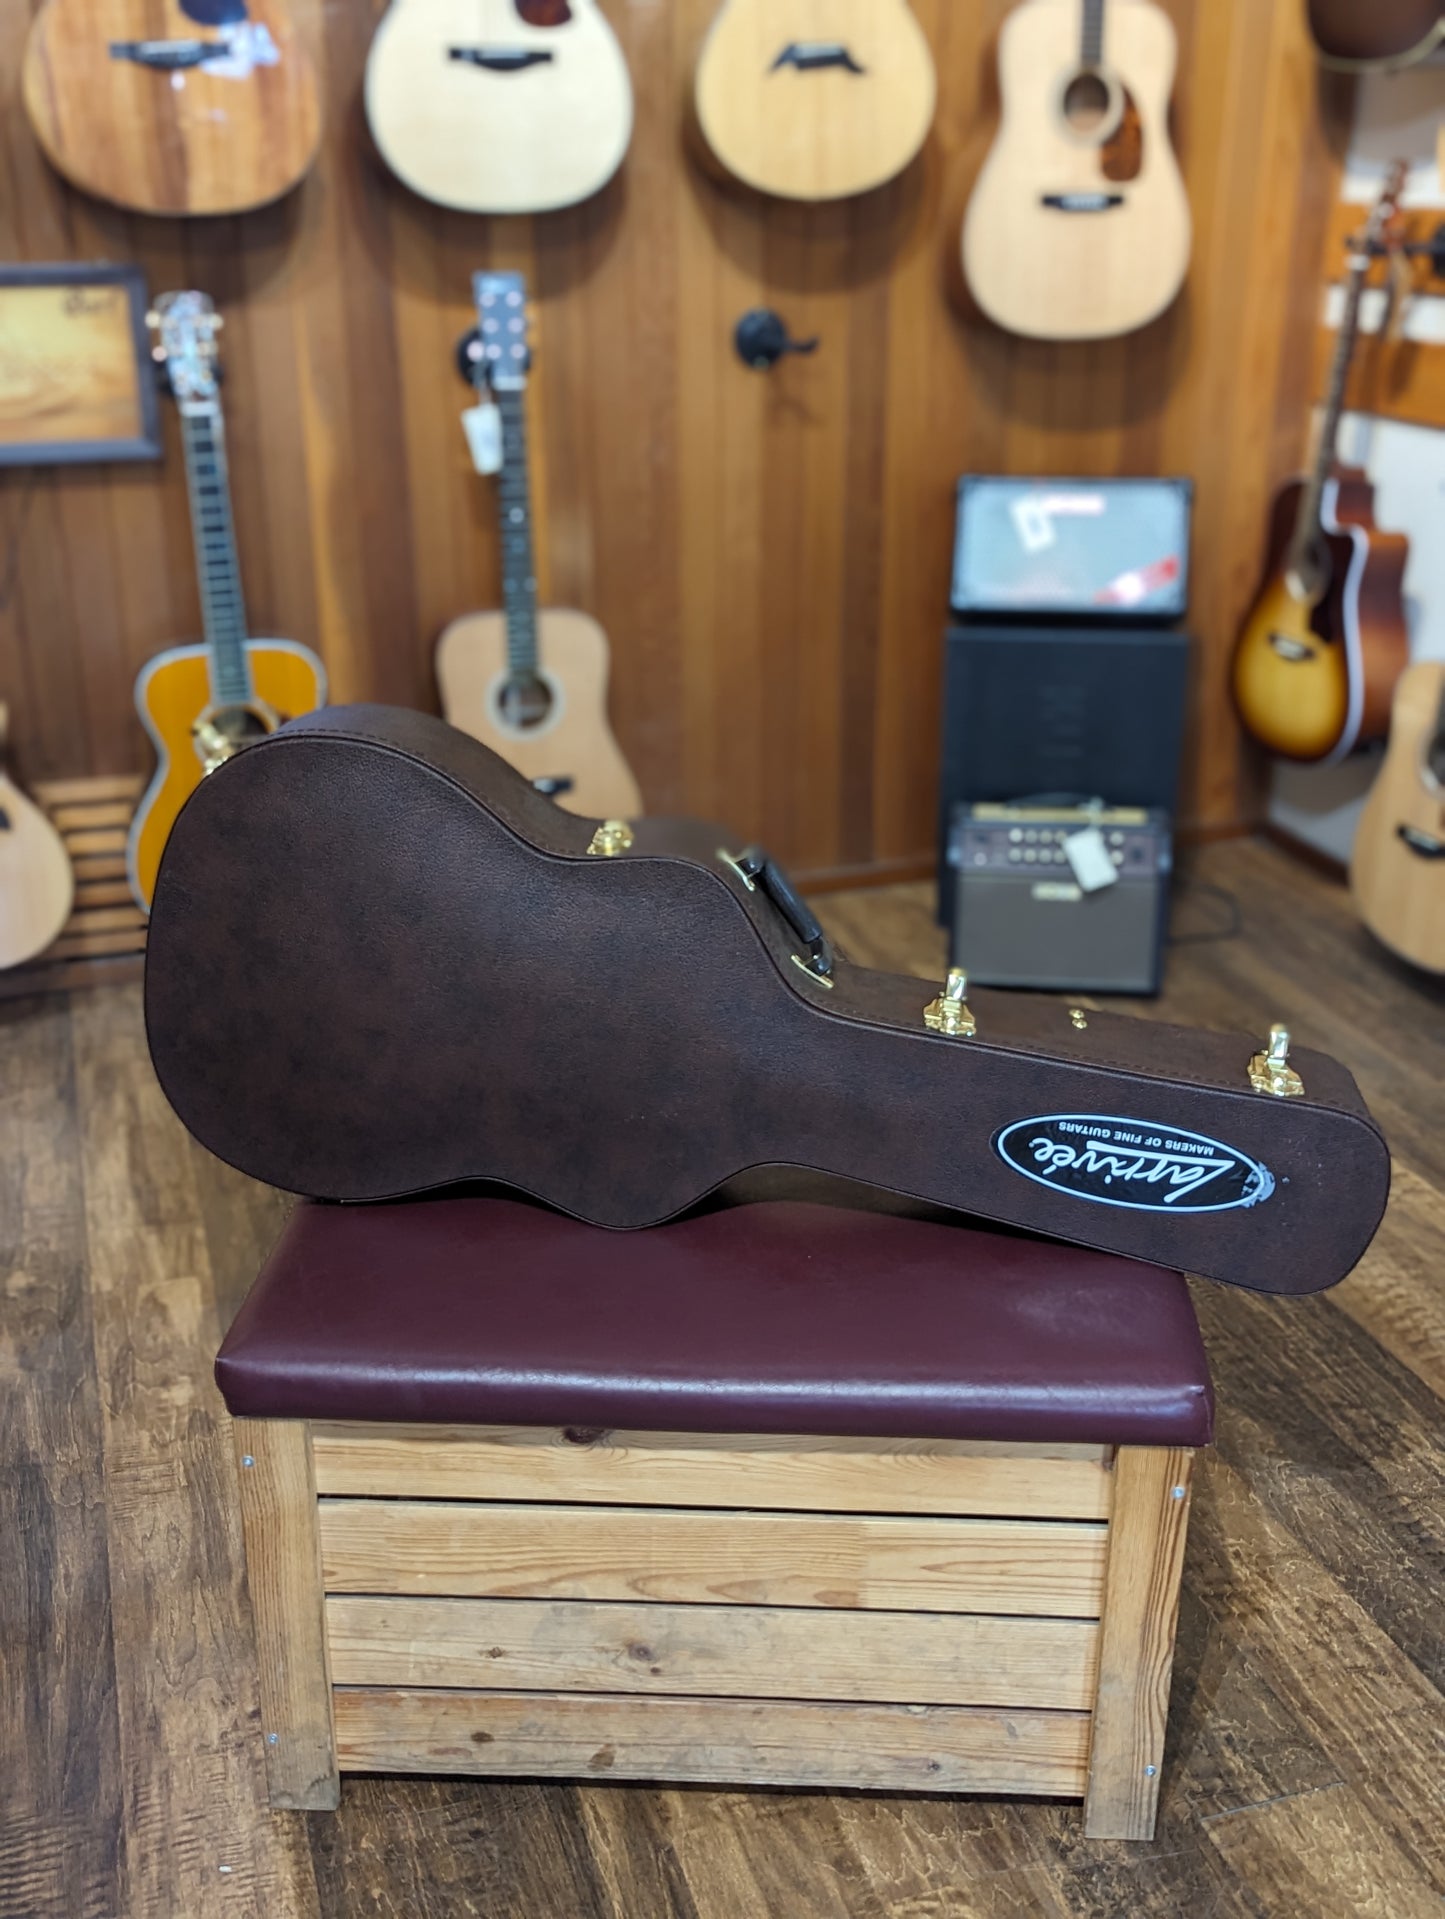 Larrivée OM-40WL Walnut/Moonspruce Acoustic Guitar w/Case (2021)